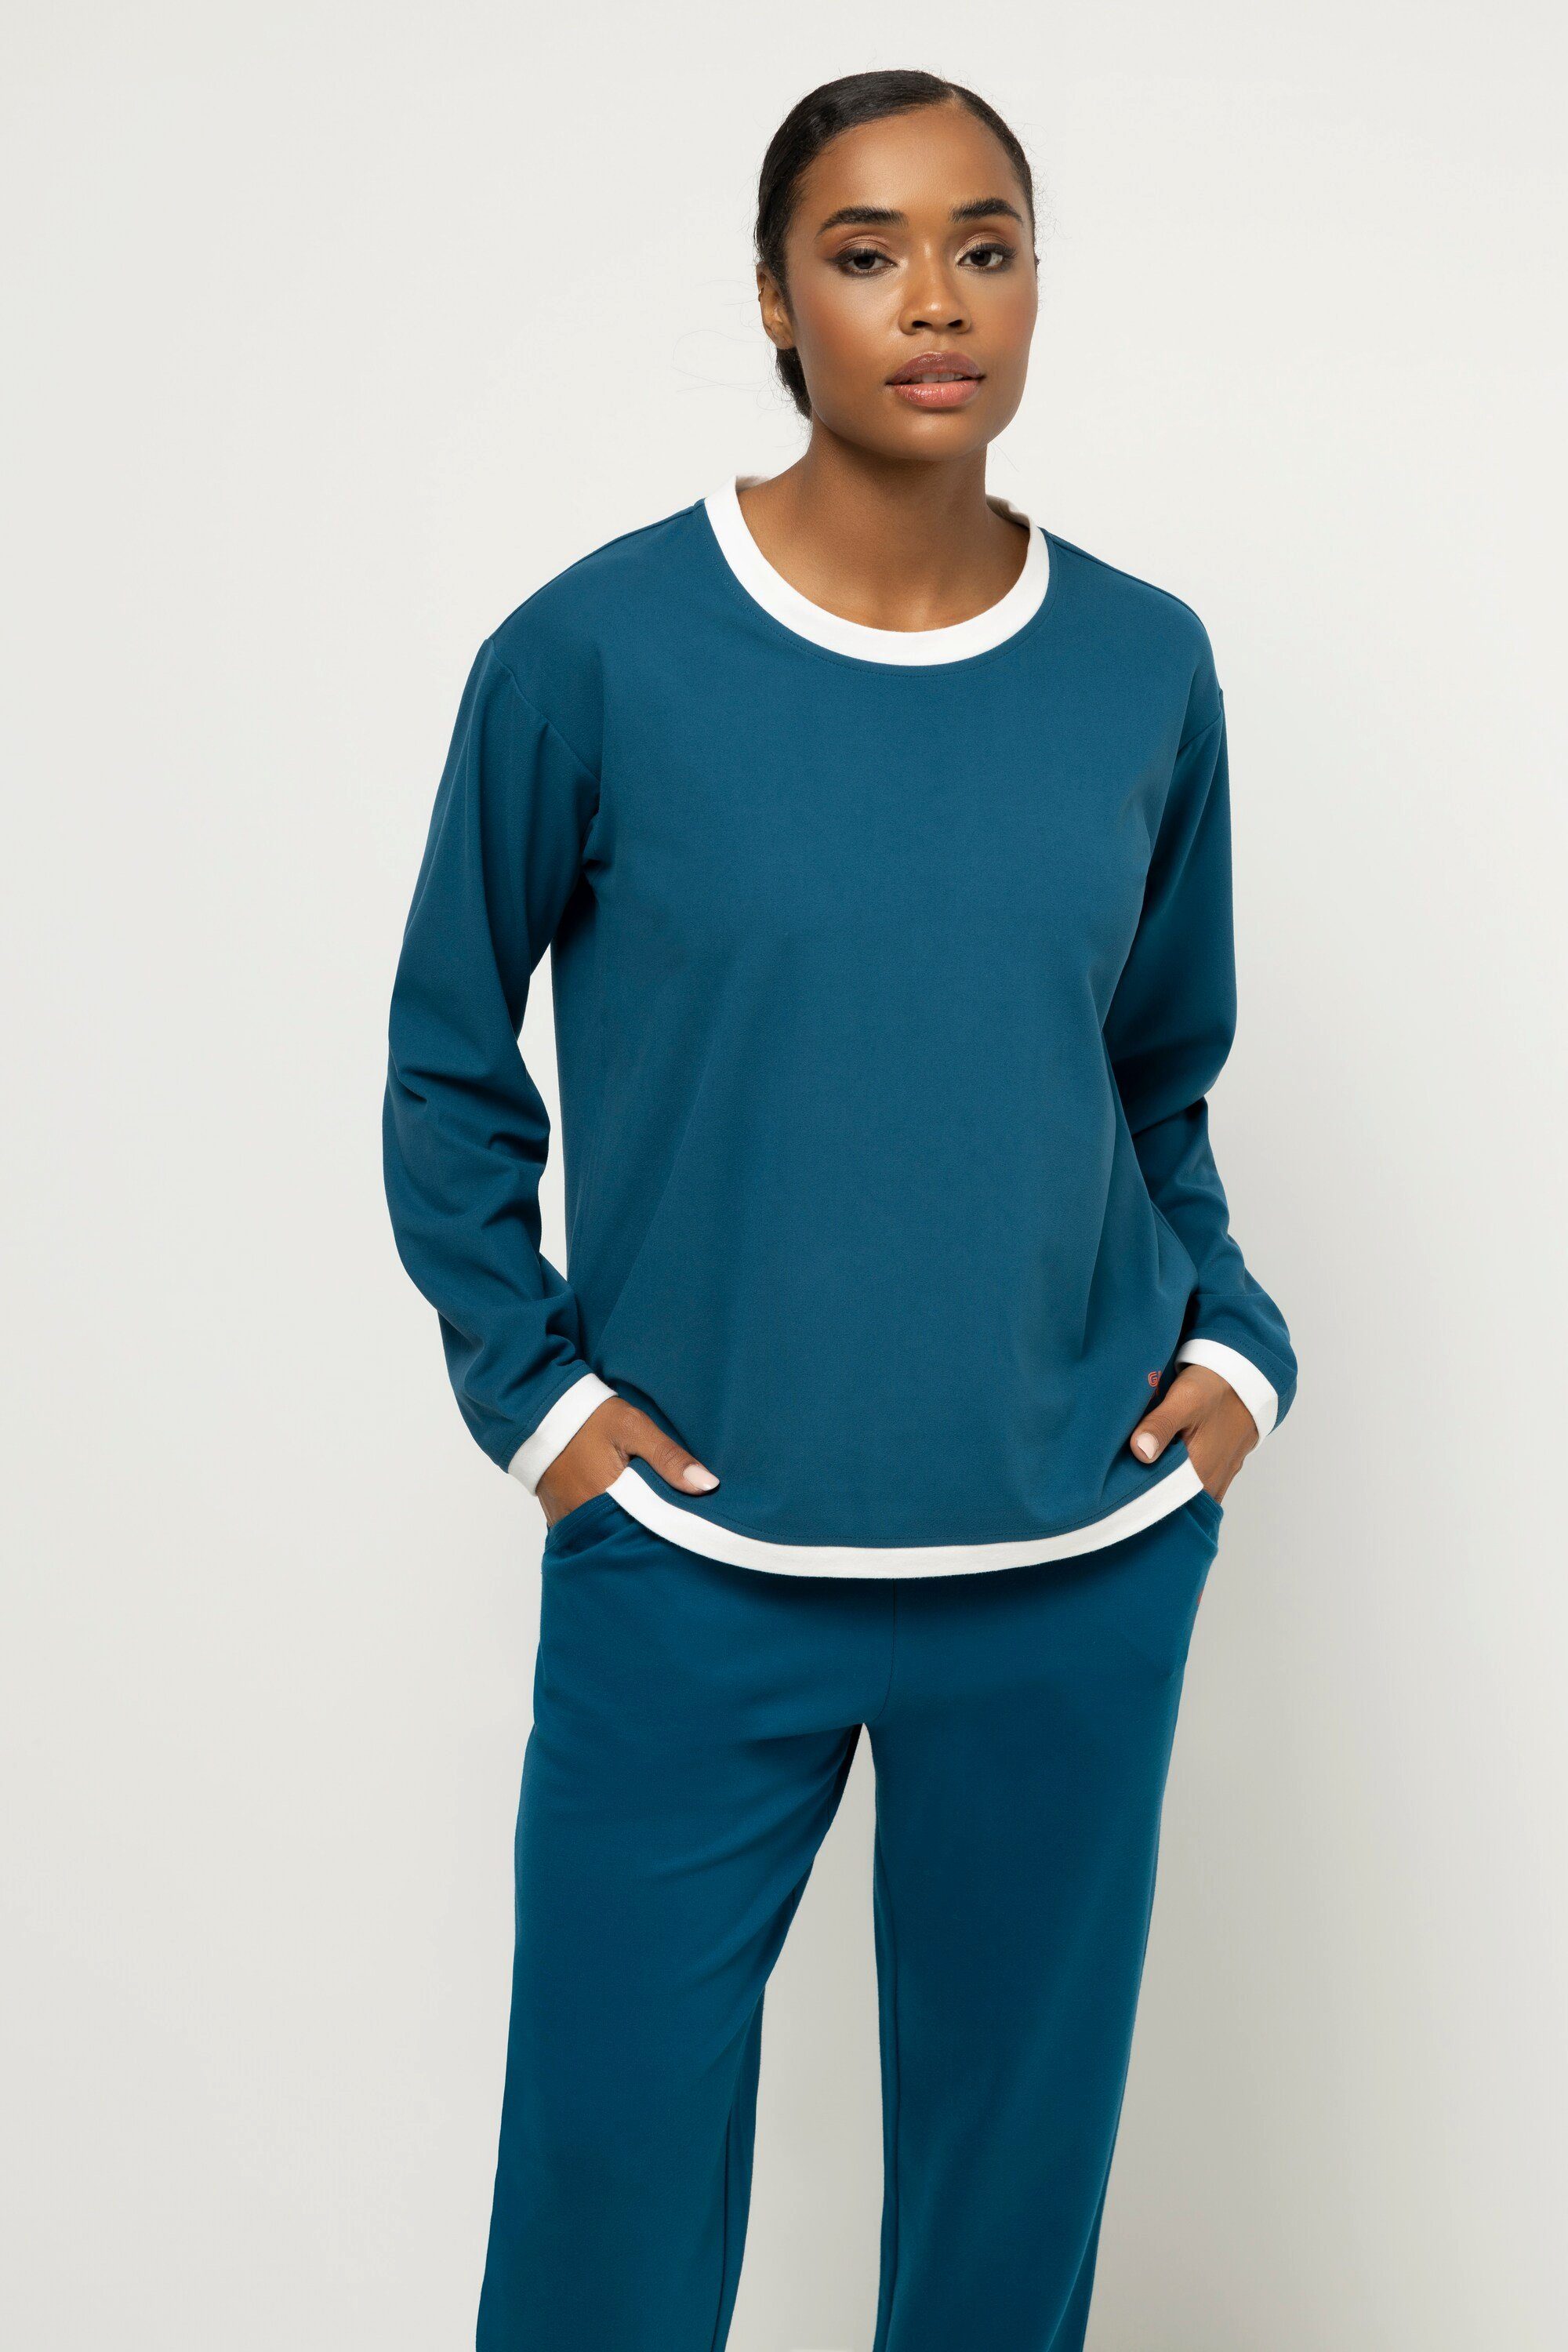 Gina Farb-Kontraste Rundhals Laura Langarm blaugrün T-Shirt Longshirt